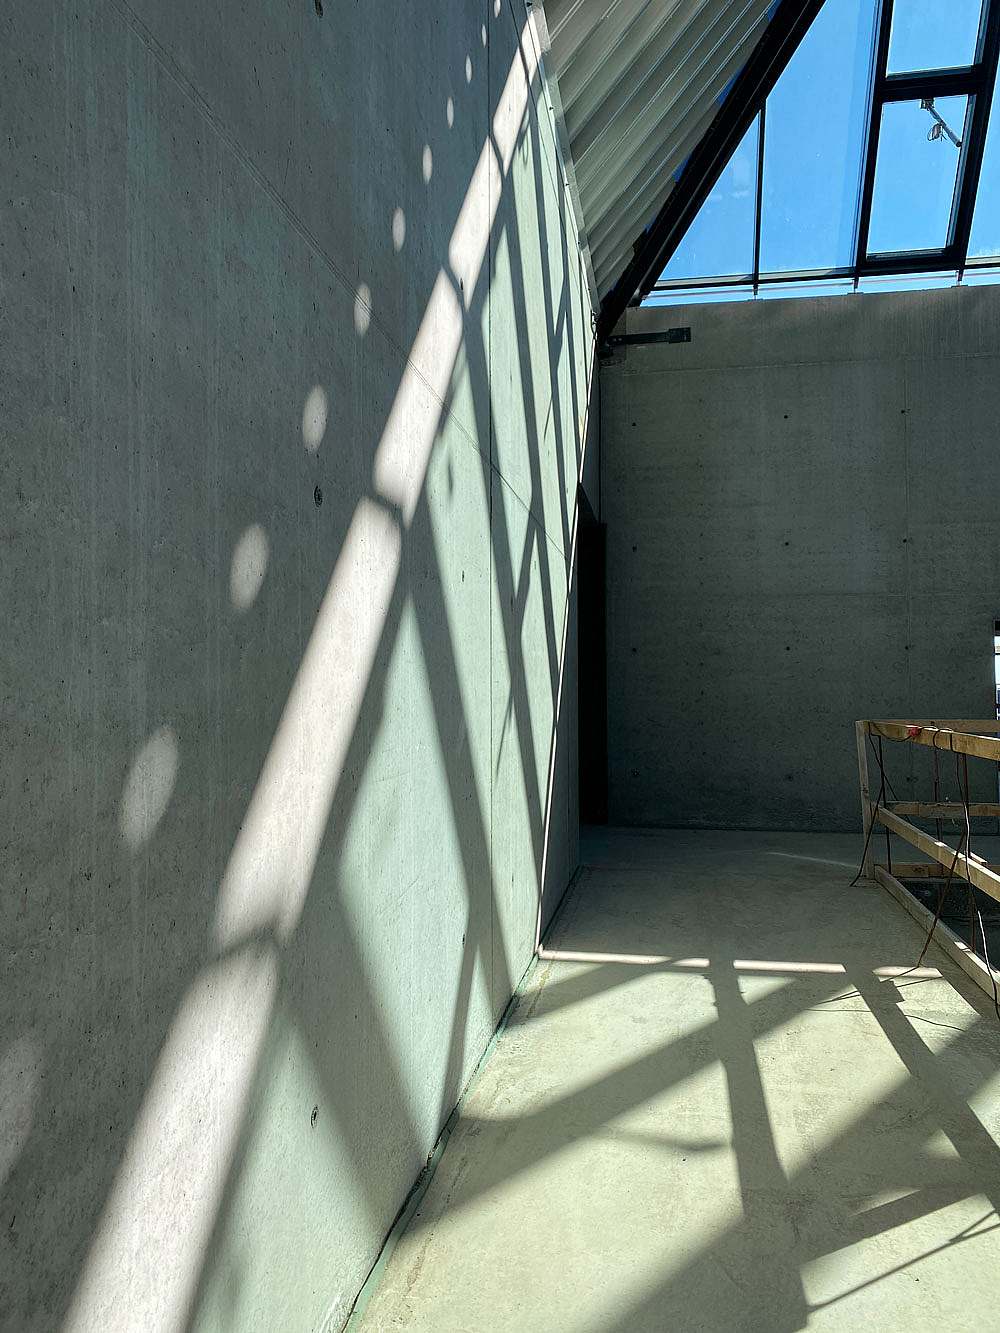 Insitu concrete and skylights